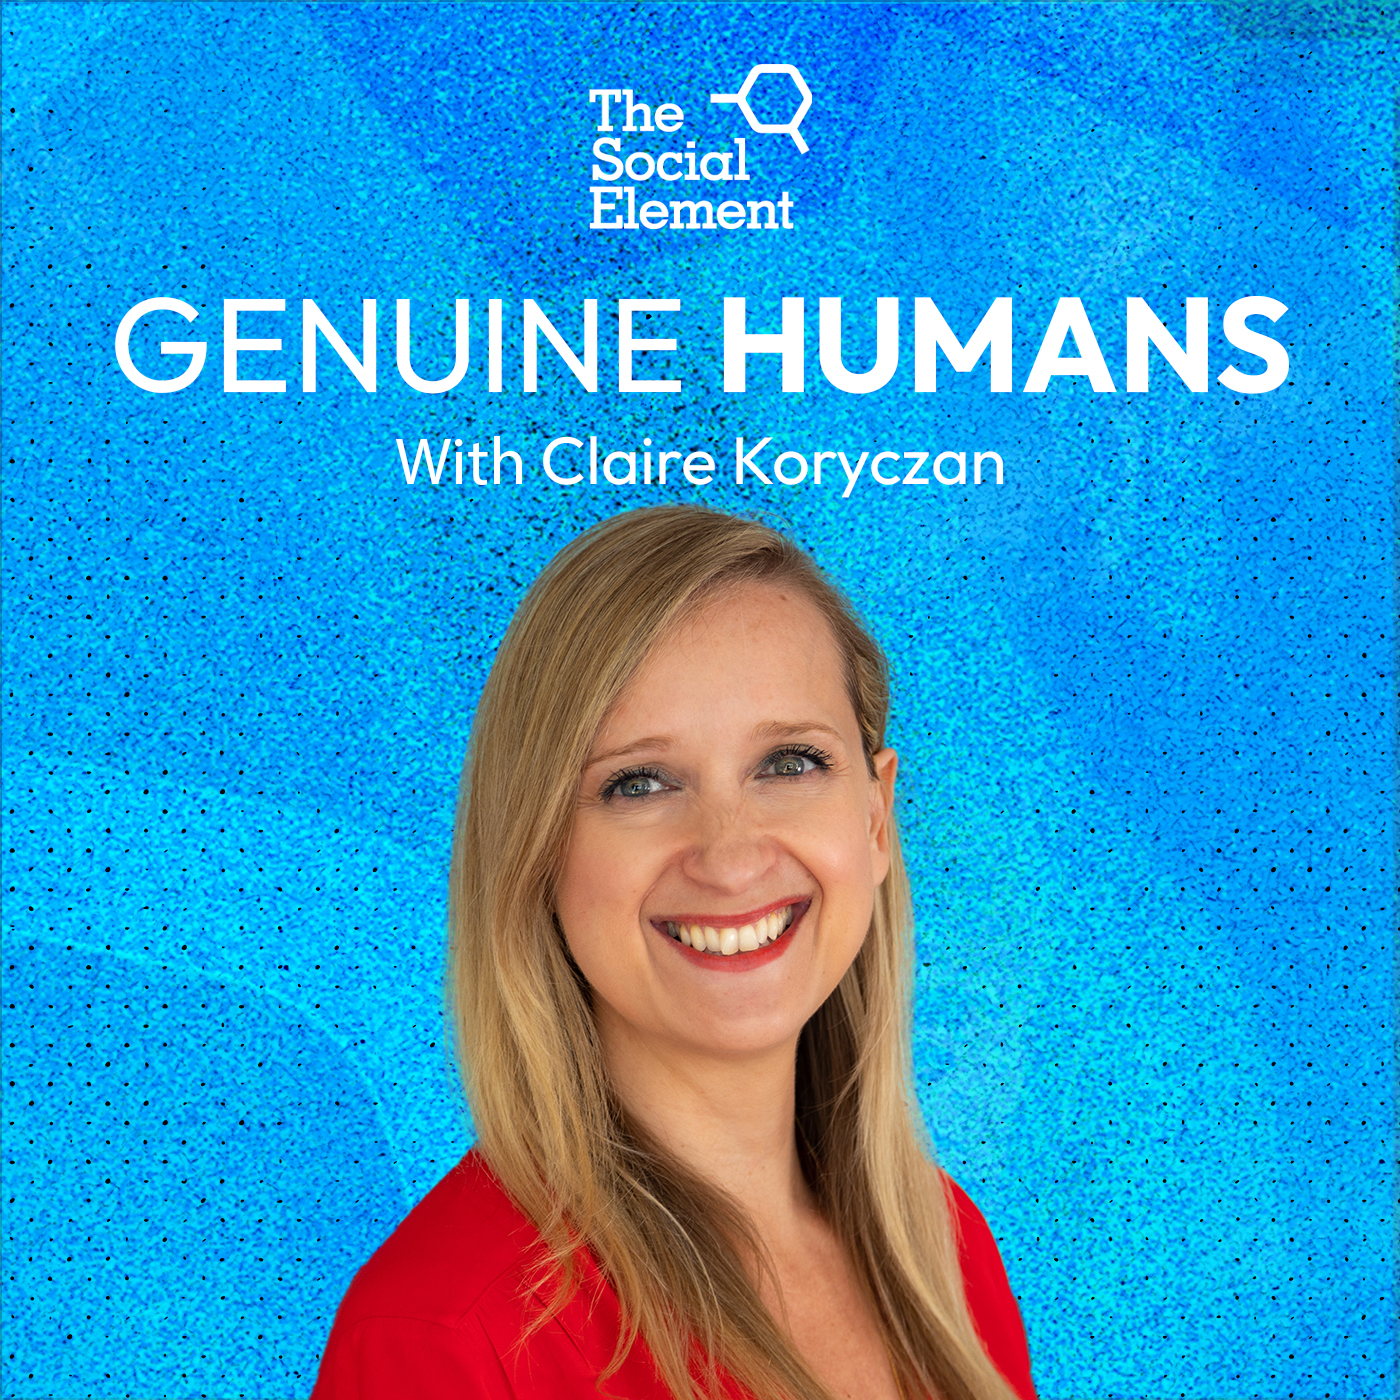 Claire Koryczan: Follow your curiosity